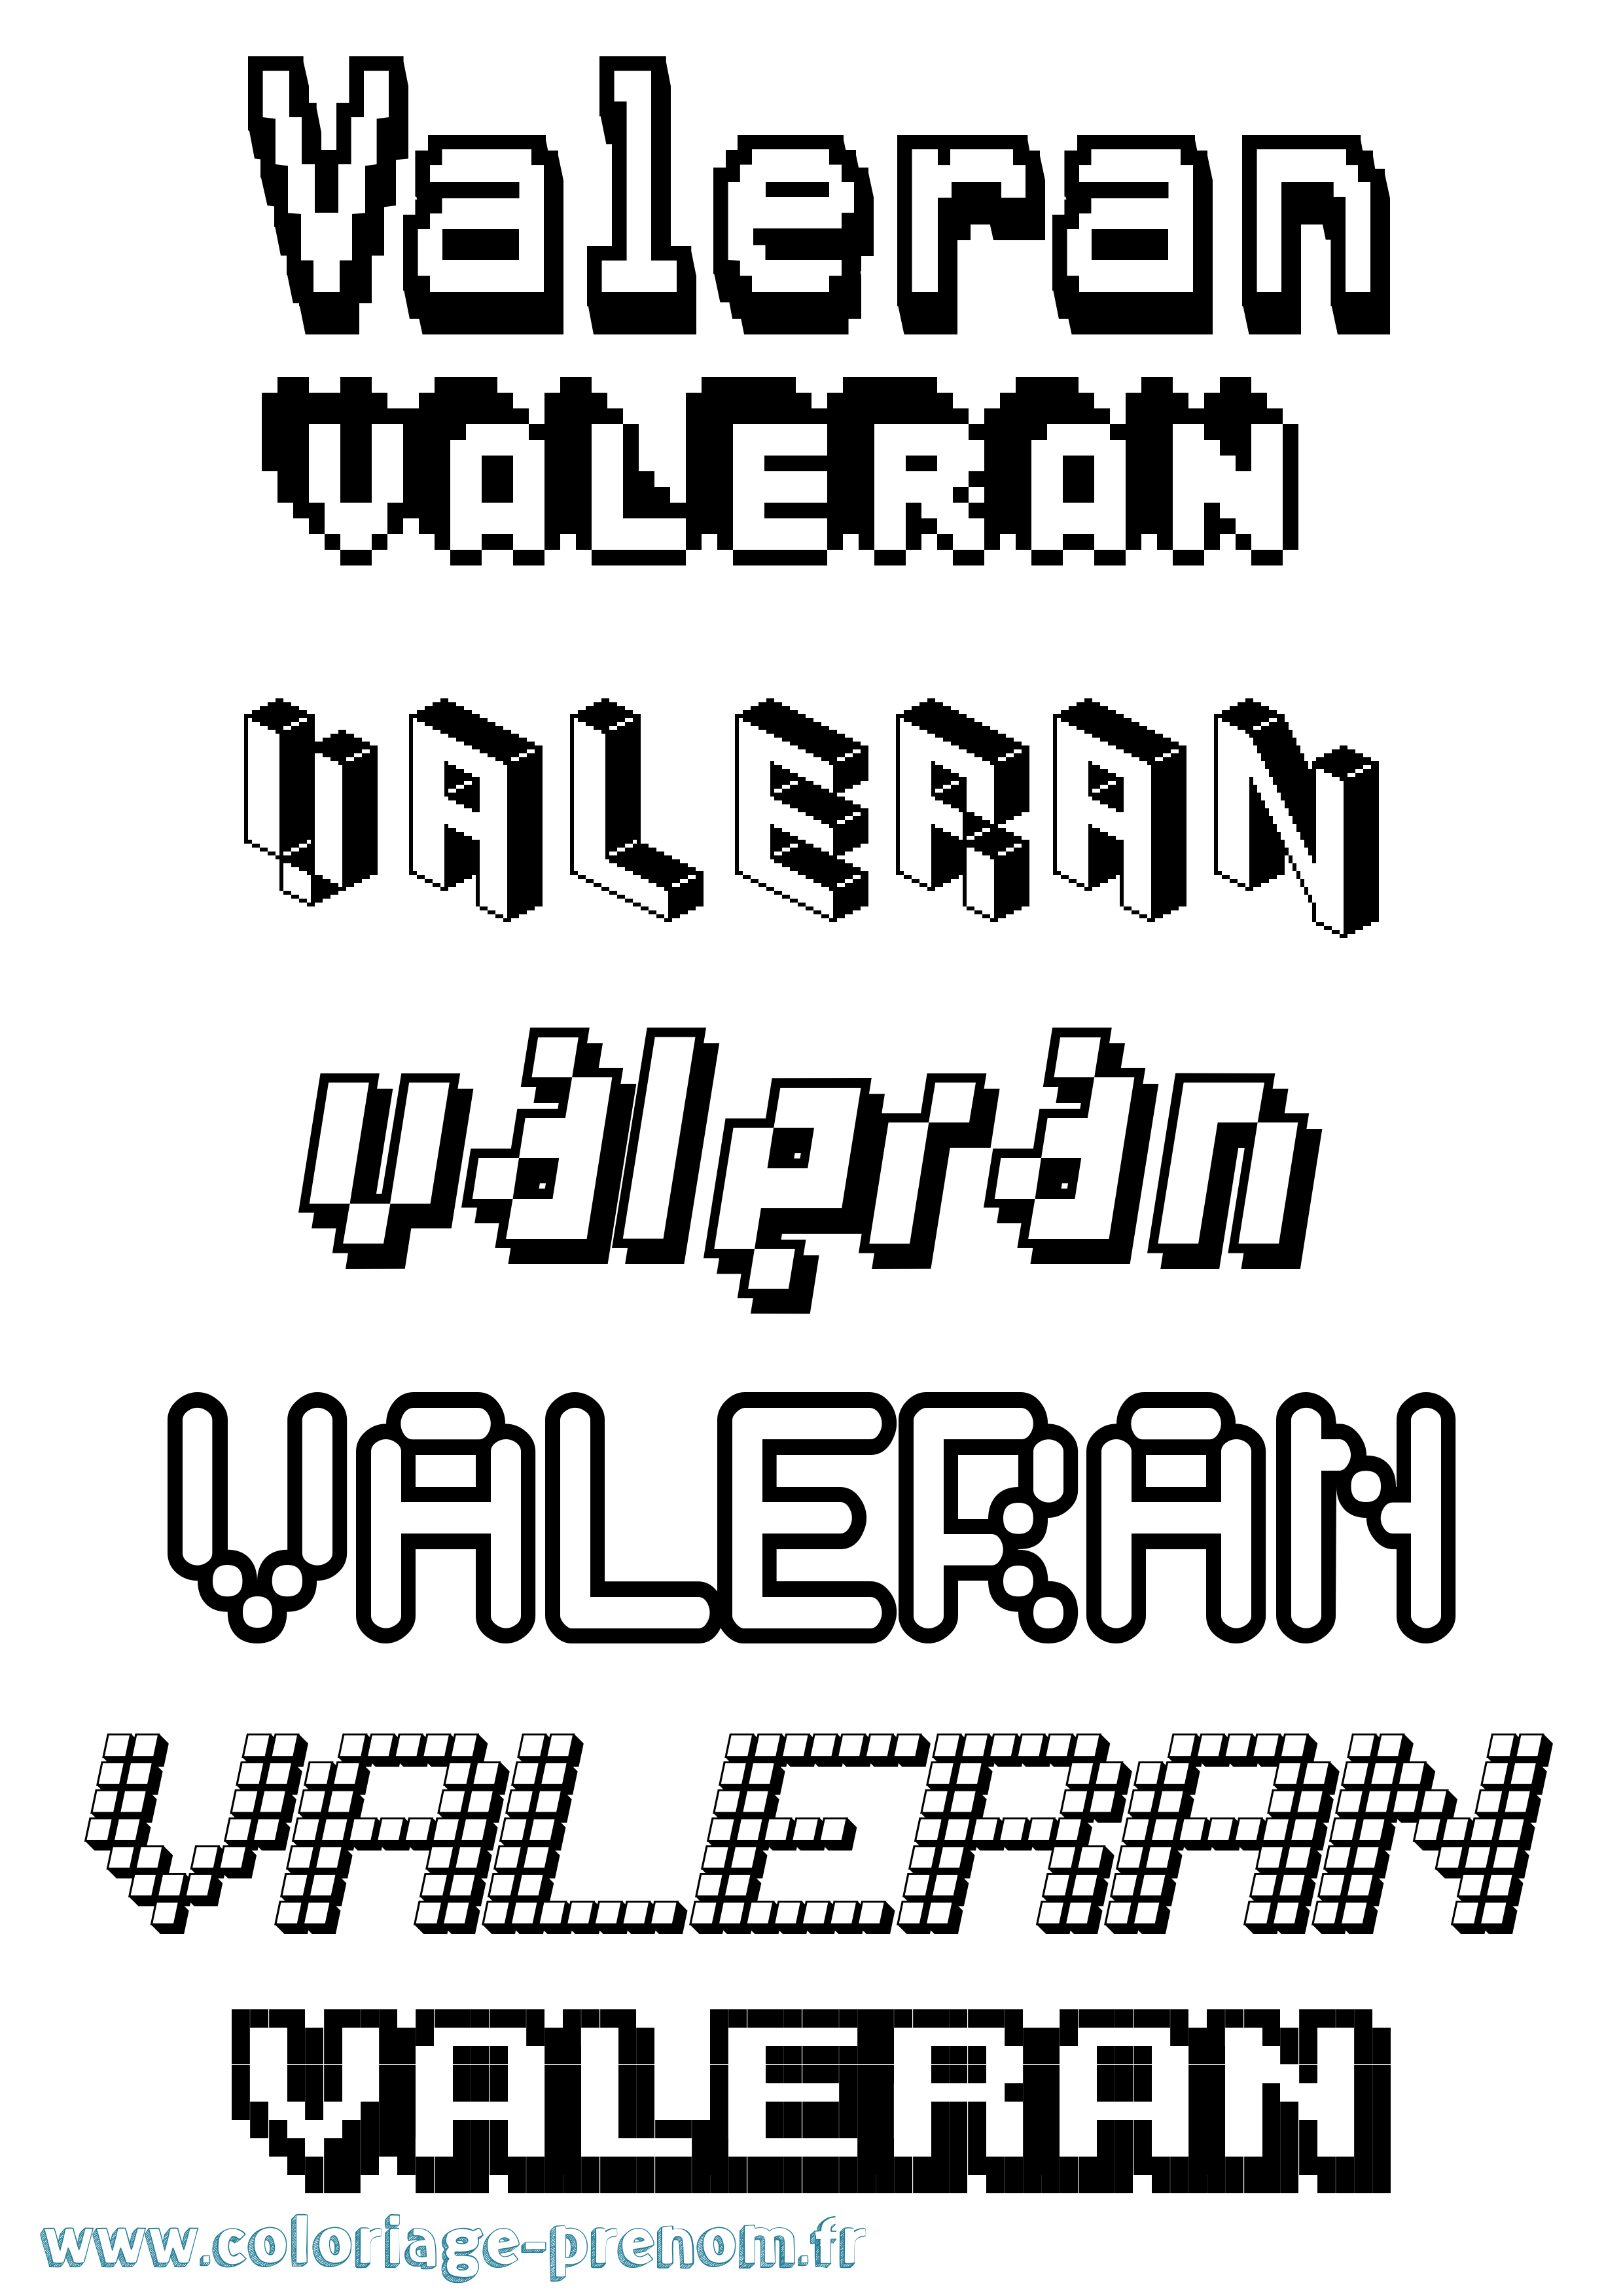 Coloriage prénom Valeran Pixel